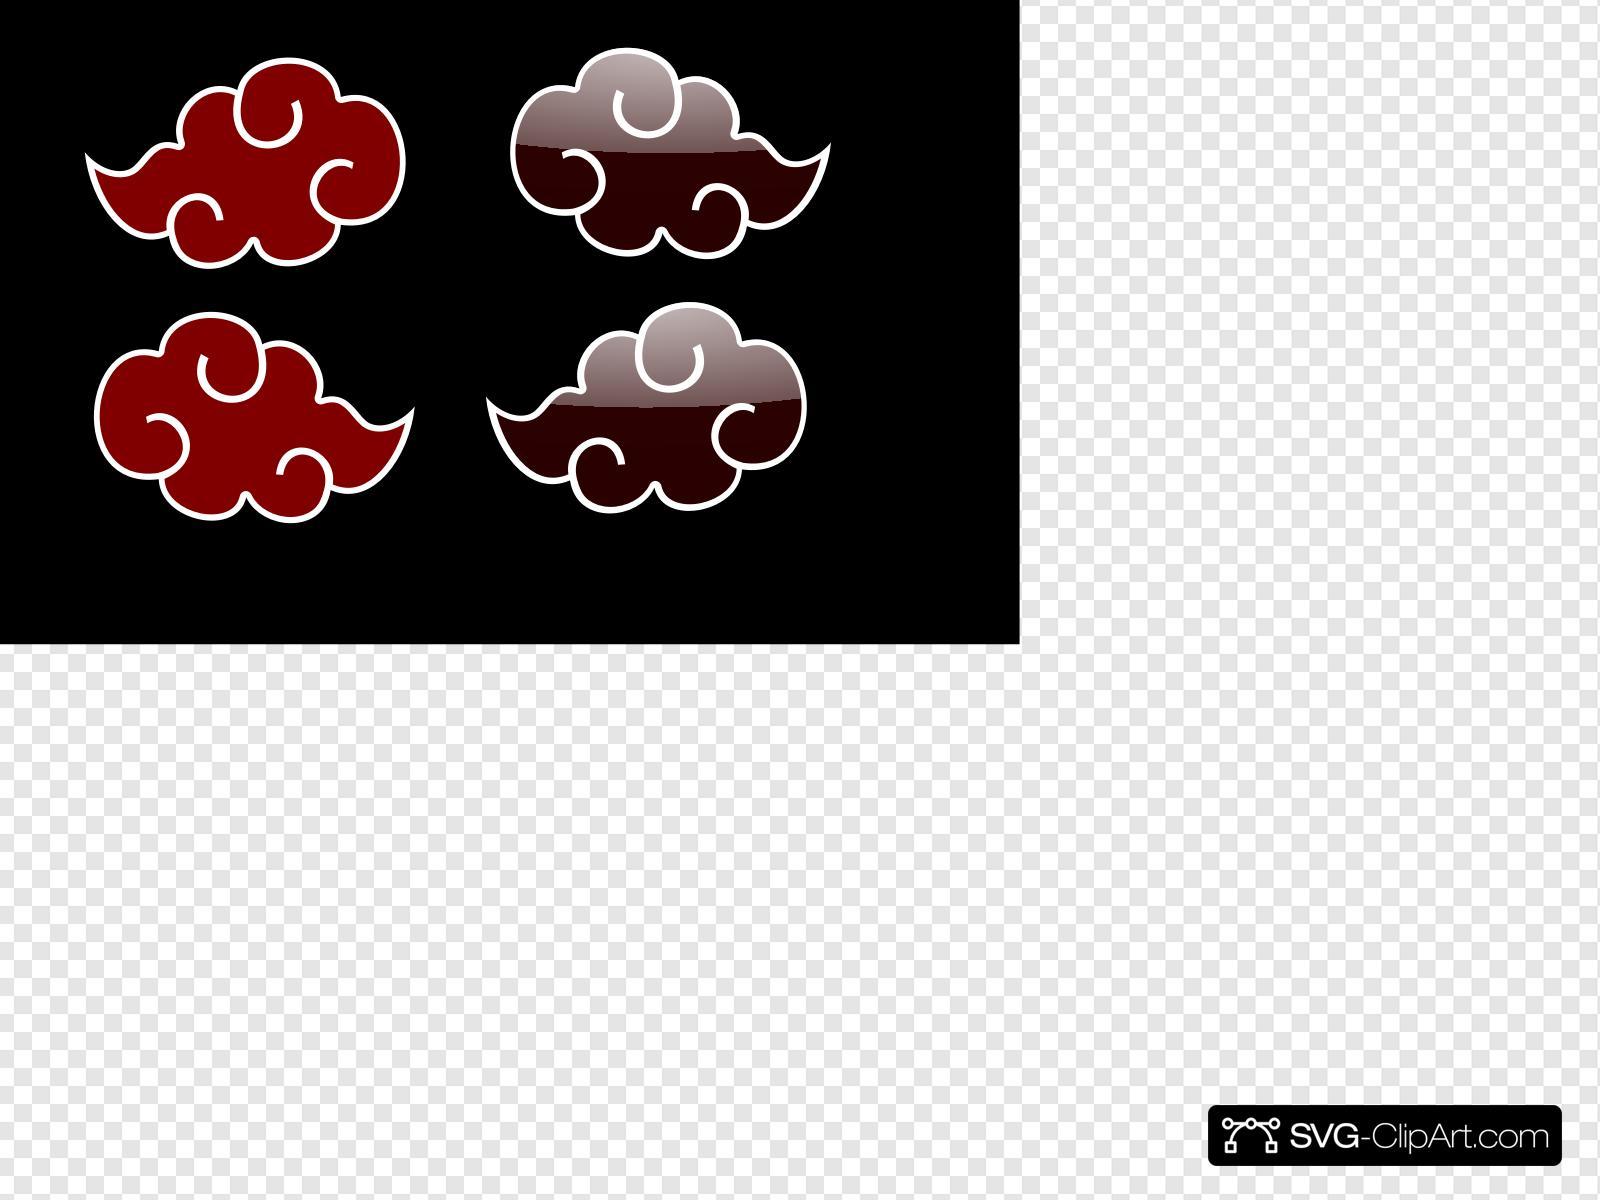 Free download Akatsuki Clouds Naruto Wallpaper for Desktop, Mobile &  Tablet. [1680x1050]. 49+ Akatsuki Cloud W…